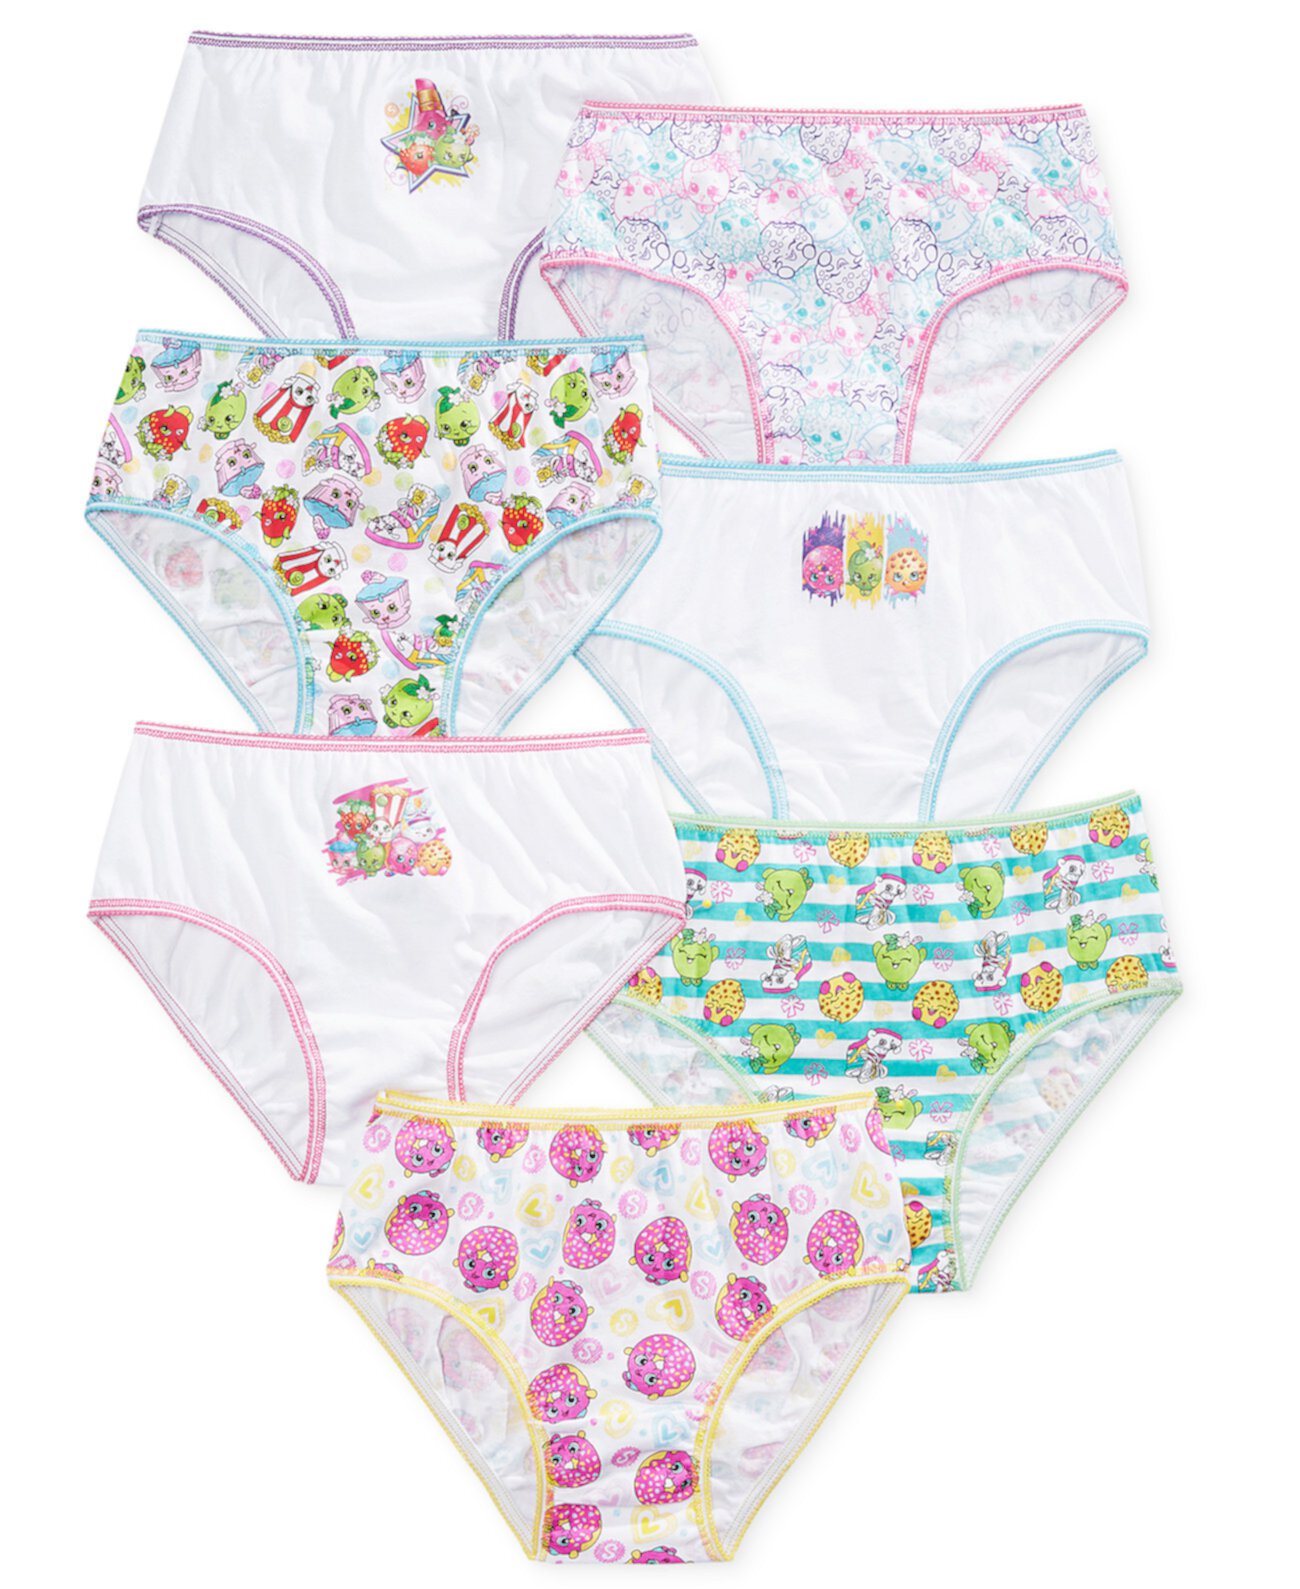 Shopkins Underwear, 7-Pack Маленькие девочки и большие девочки Disney